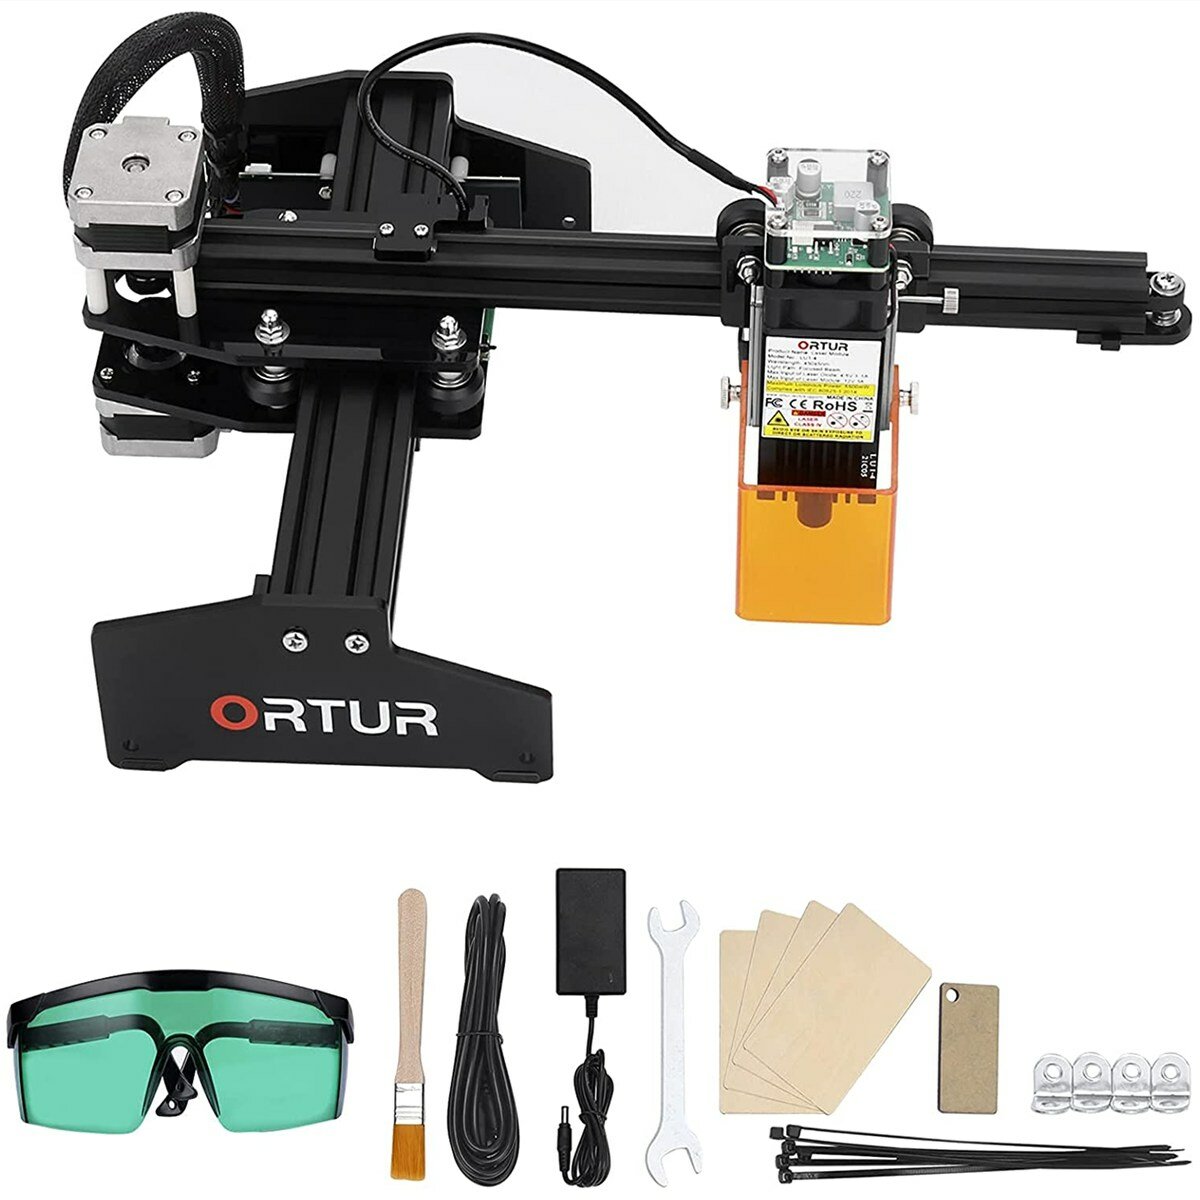 

ORTUR Laser Master Mini Eye-Protection Laser Engraver CNC Portable Laser Engraving Cutting Machine Logo Picture DIY Maki